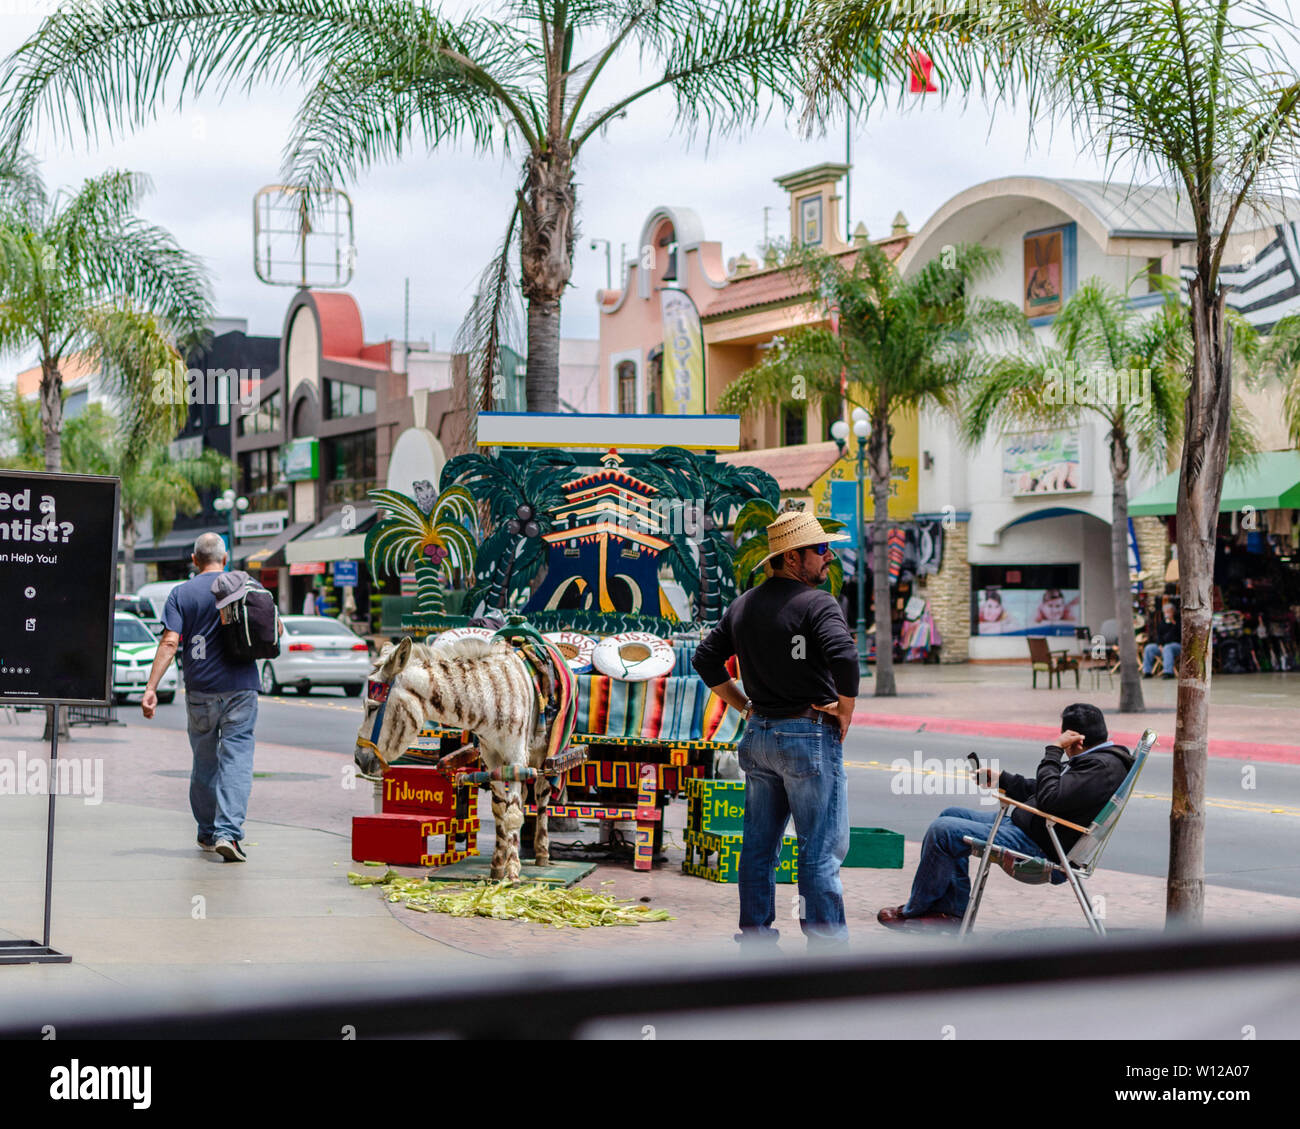 Zonkey in Tijuana streets Stock Photo